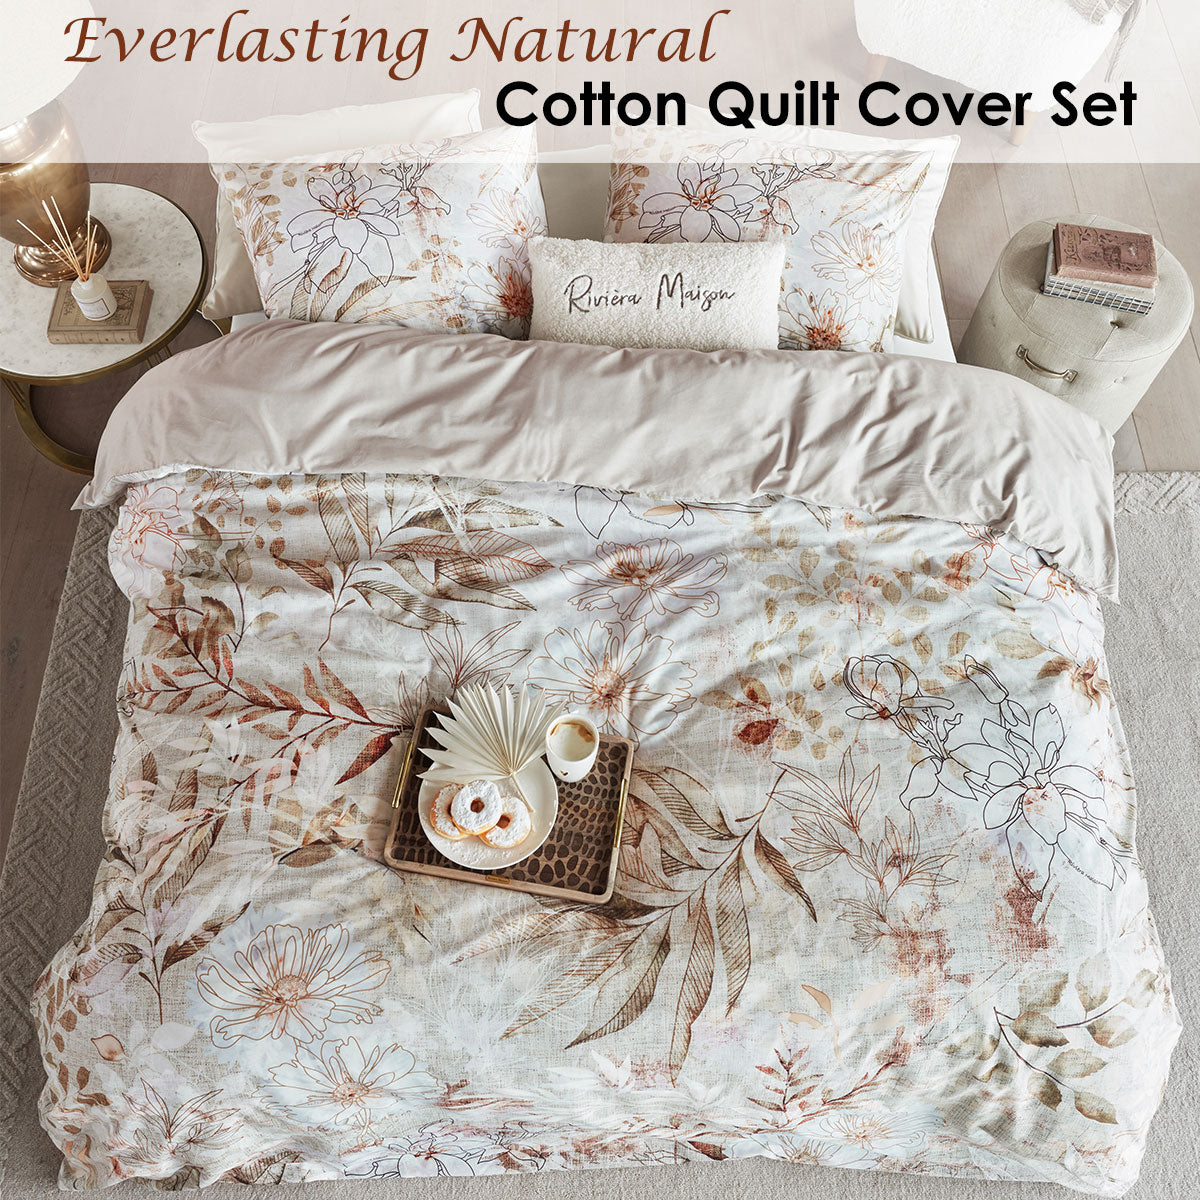 Riviera Maison Everlasting Natural Cotton Quilt Cover Set King